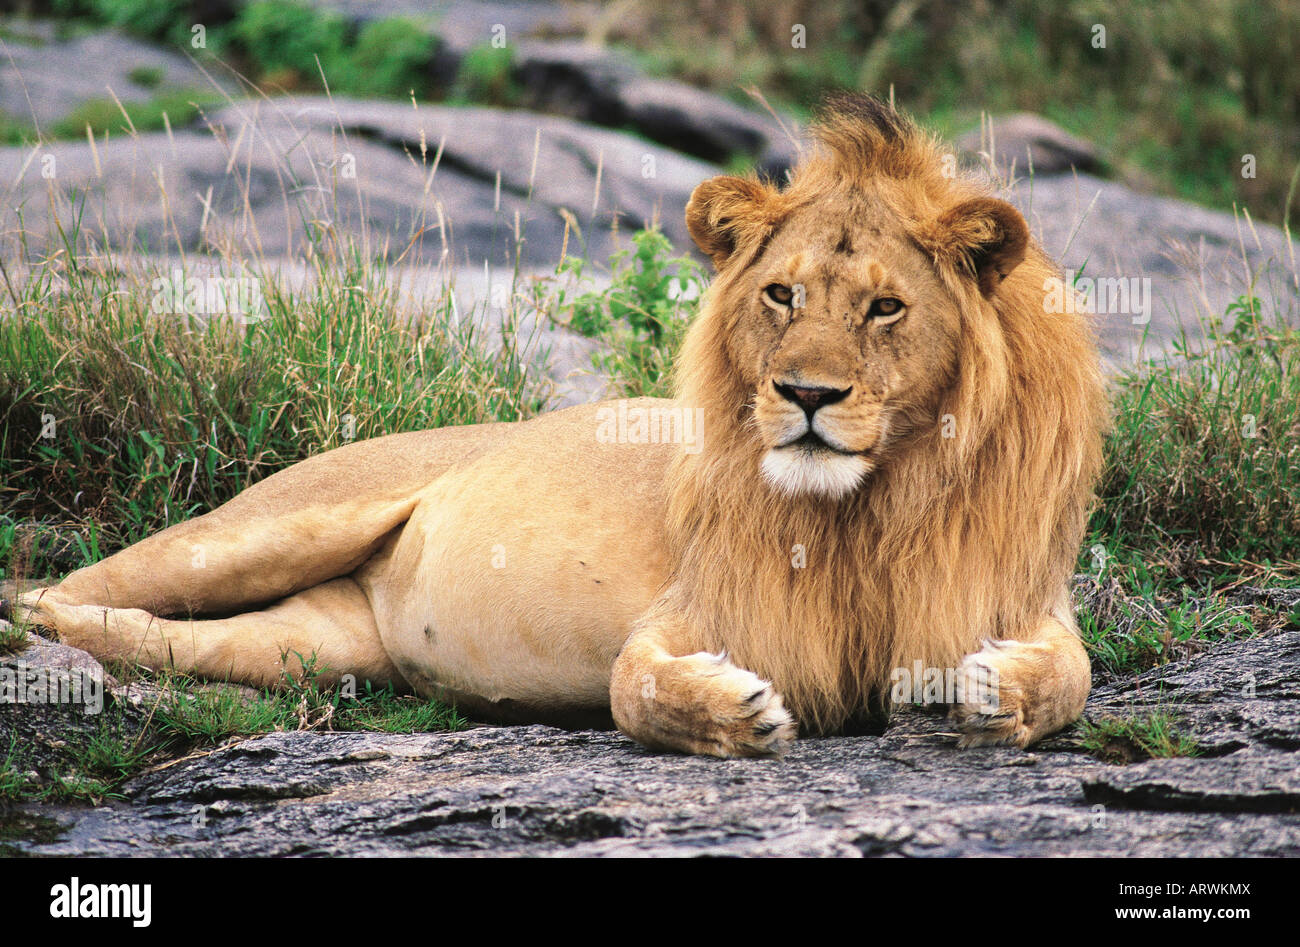 Feinen goldenen Haaren gut genährt männlichen Löwen mit goldenen Mähne entspannende im Serengeti Nationalpark Tansania Ostafrika Stockfoto